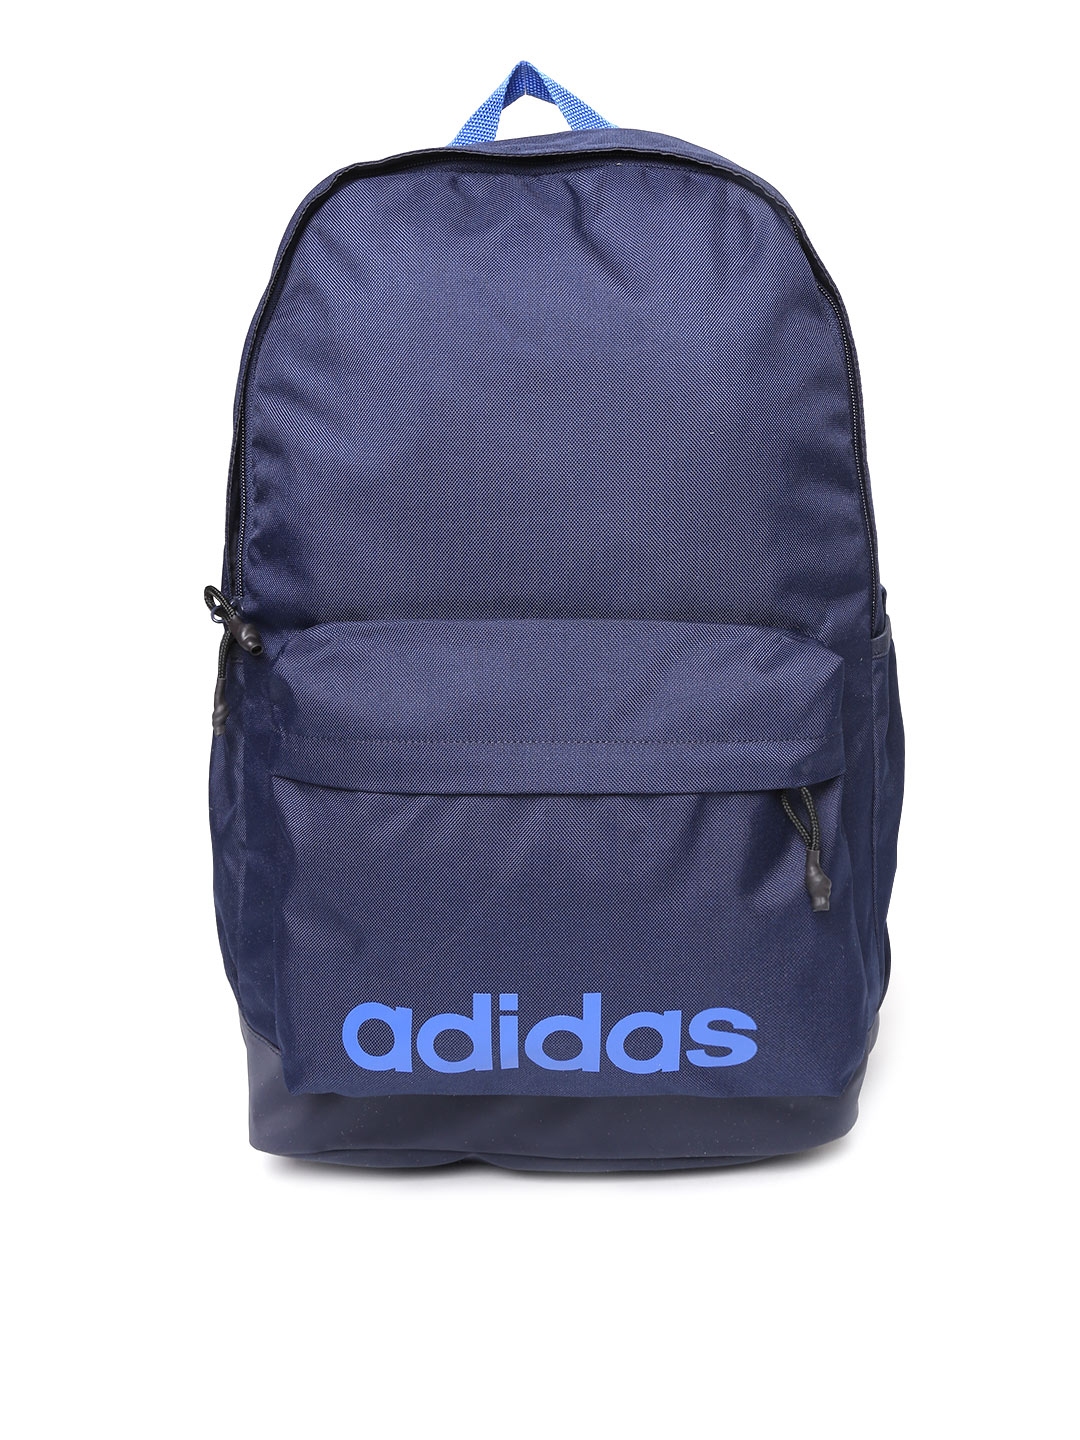 navy blue adidas bag